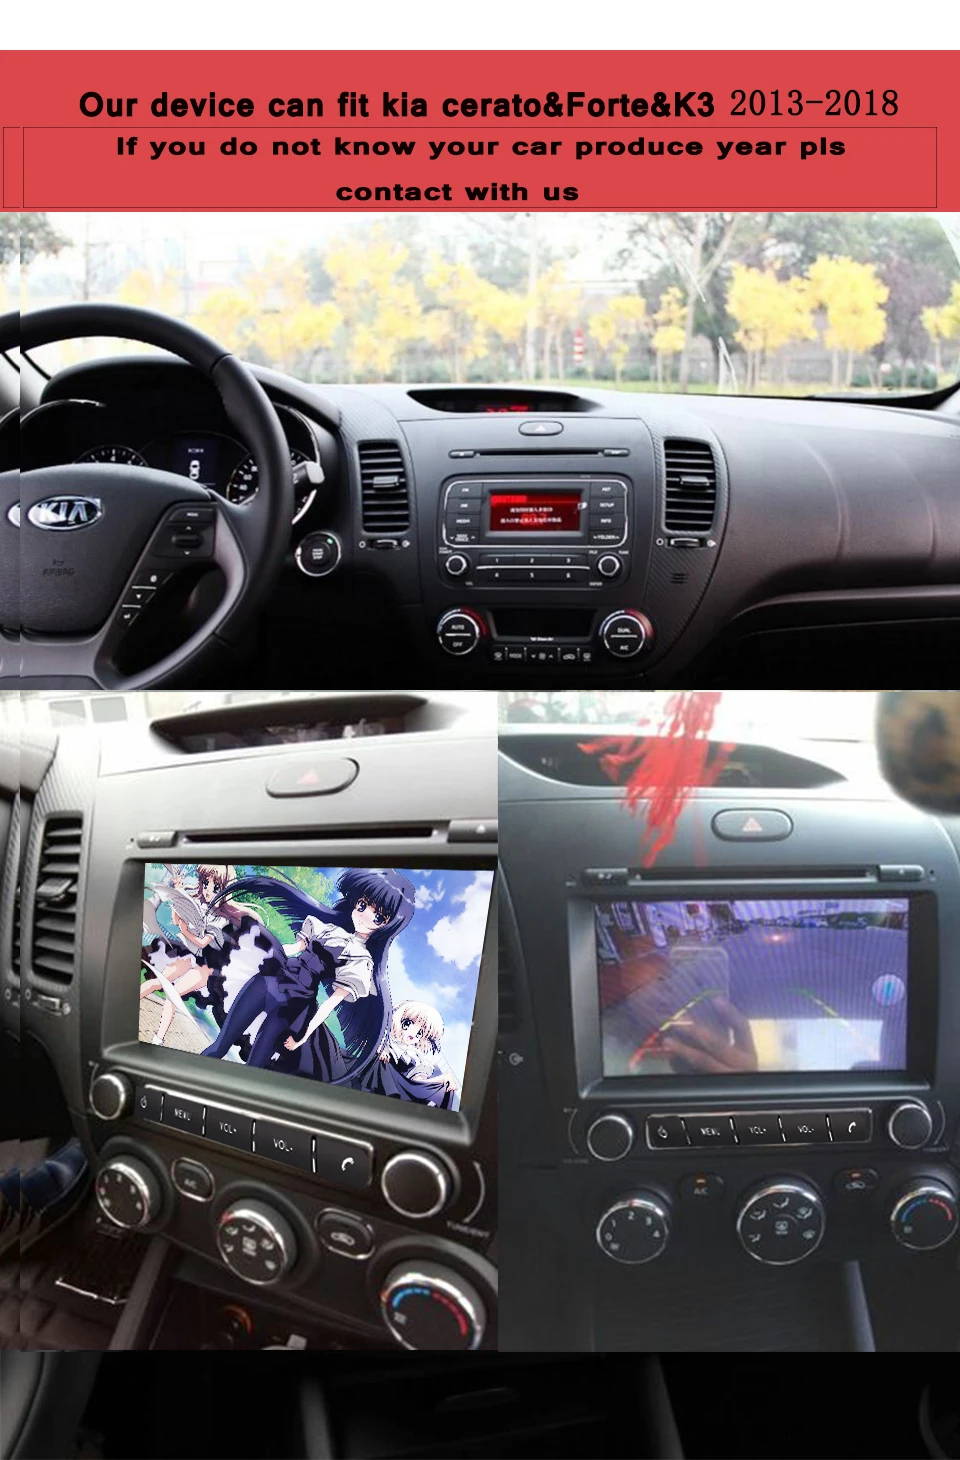 Discount 1024*600 HD IPS In dash auto-stereo media audio video dvd player 4g lte gps glonass for Kia CERATO K3 2013 2014 2015 2016 aux bt 1